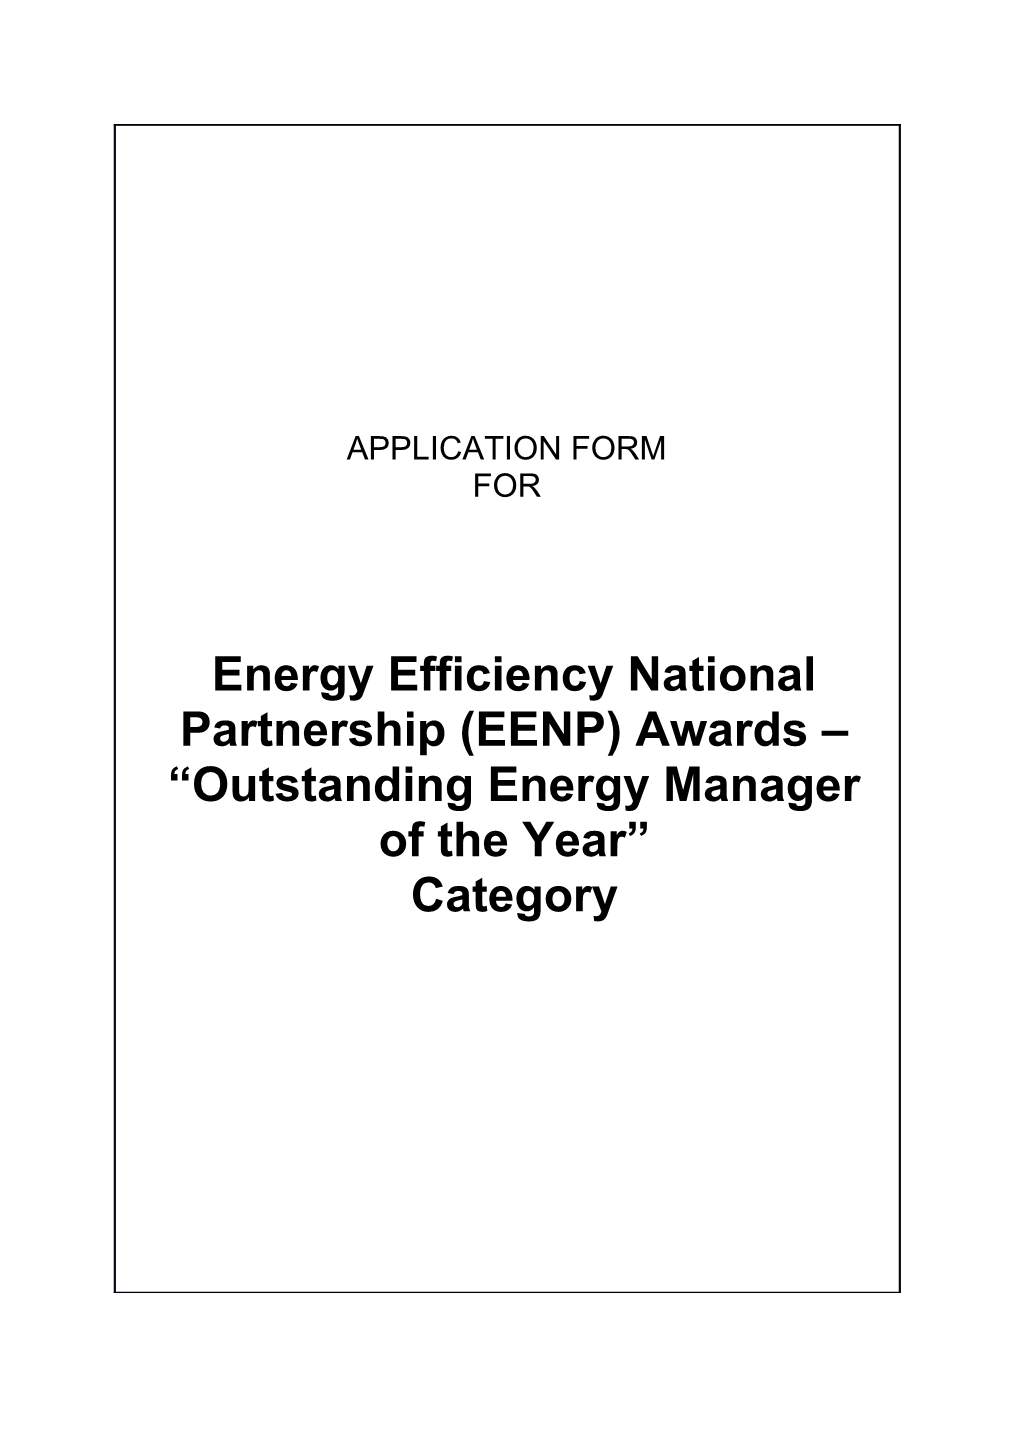 Section A: Energy Management Framework